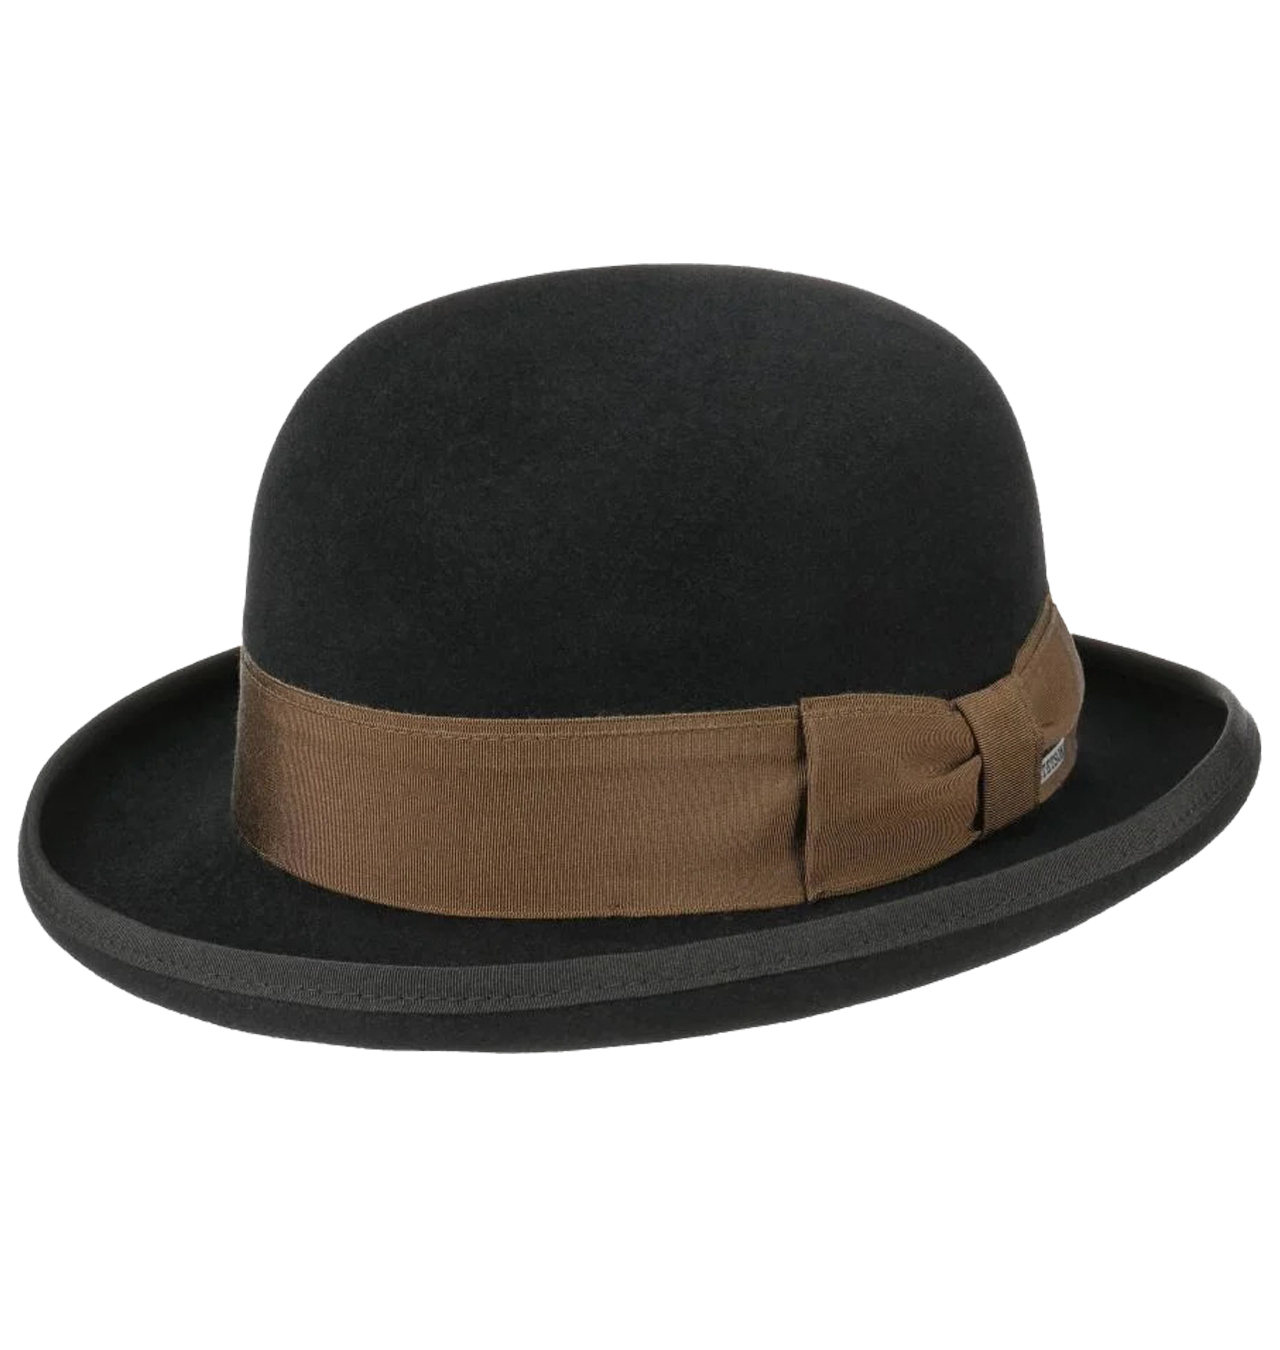 Stetson - Bowler Fur Felt Hat - Black